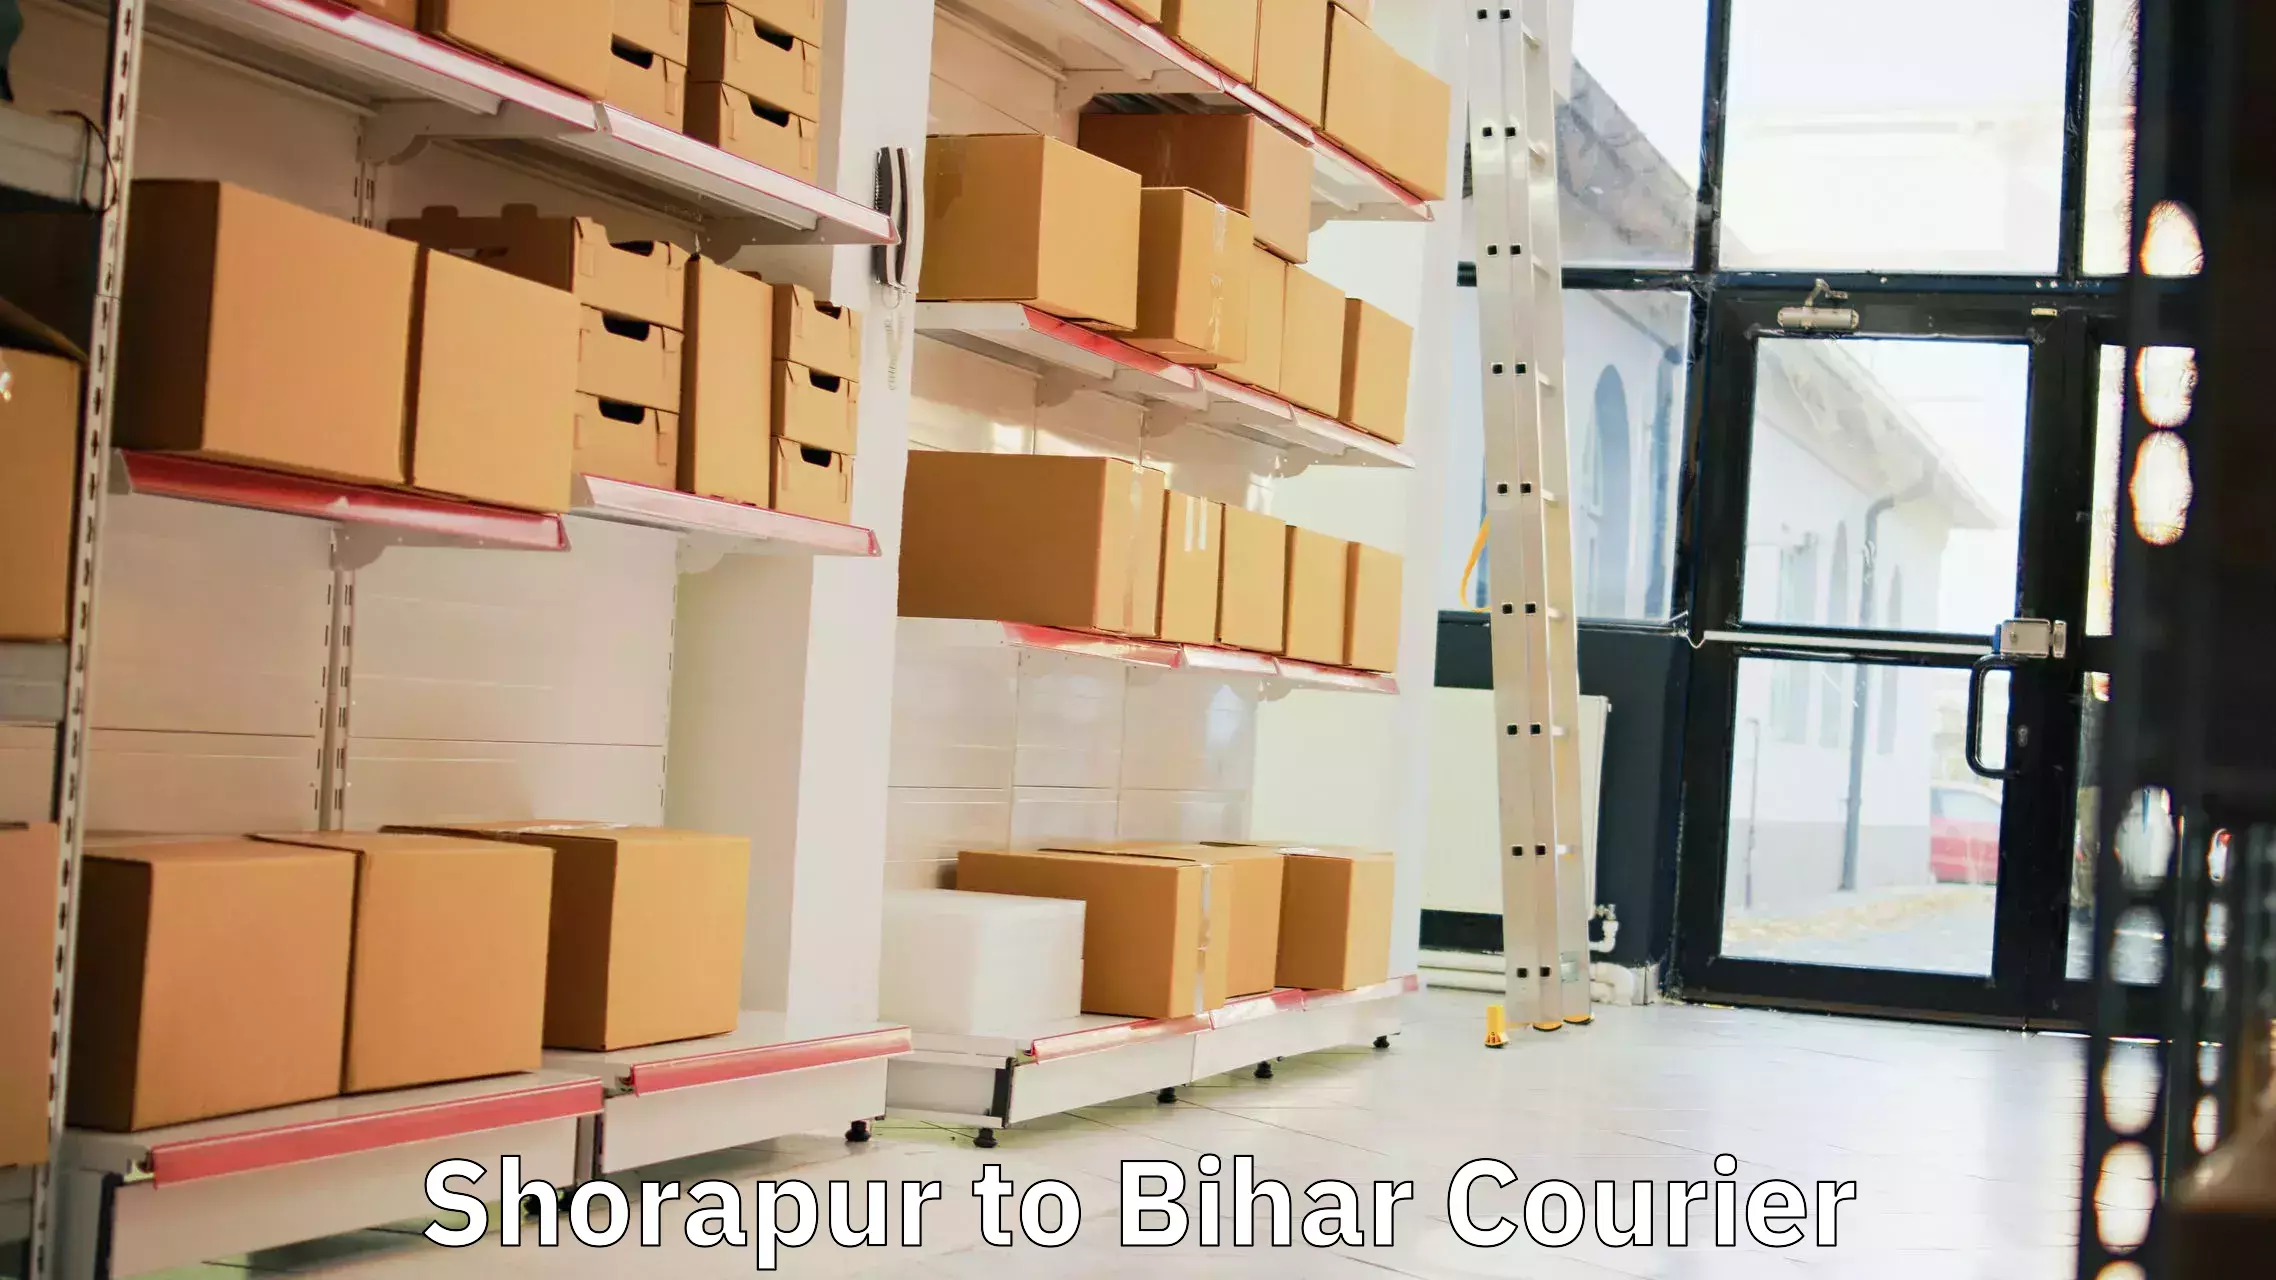 Flexible delivery schedules in Shorapur to Bihar